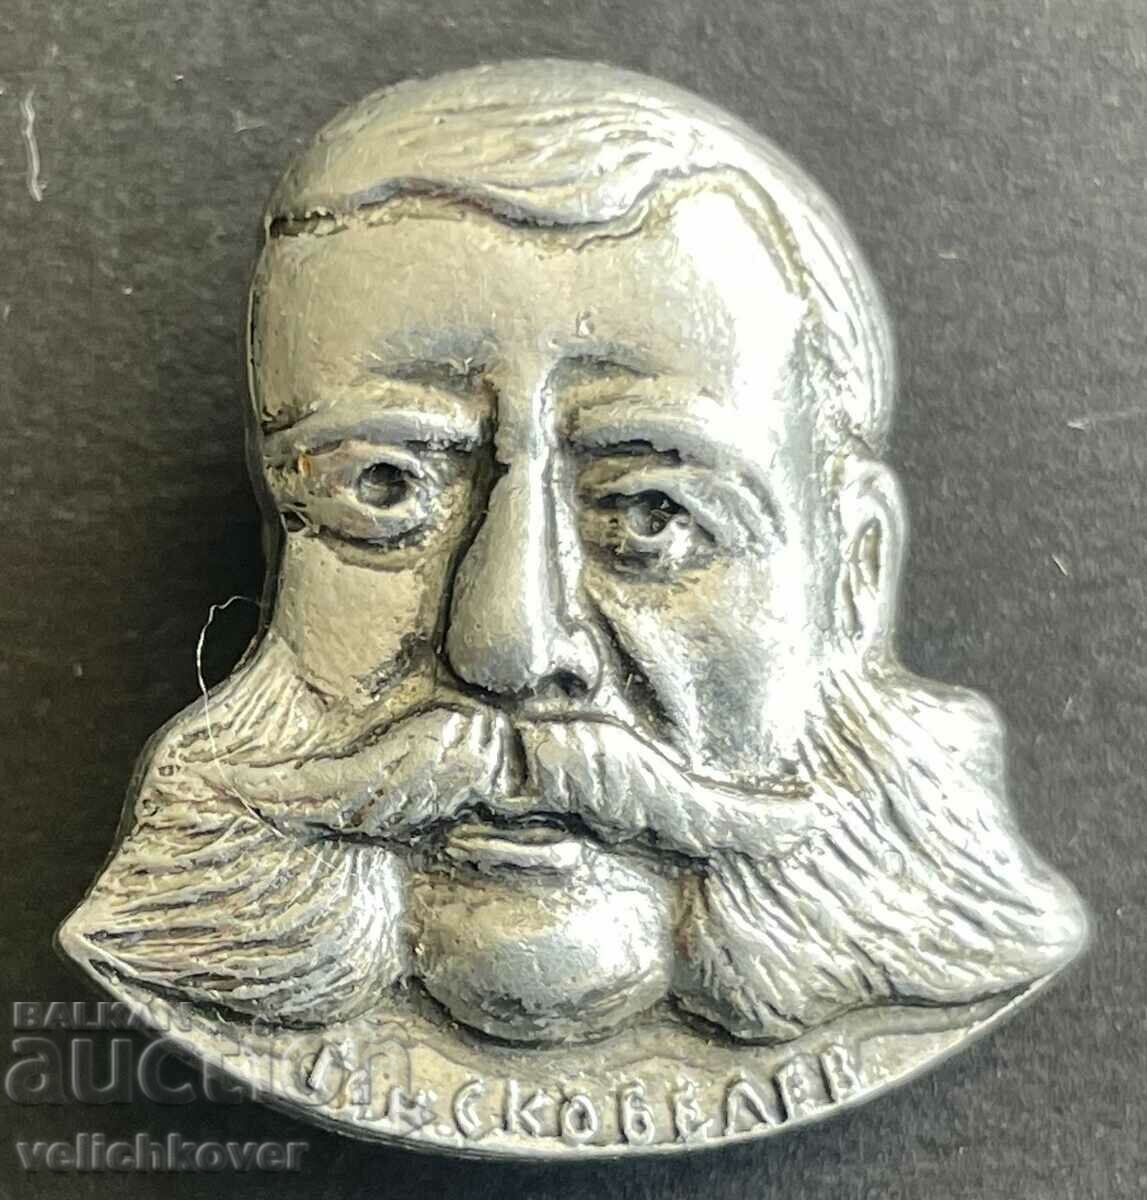 35465 Bulgaria badge with the image of General Skobelev